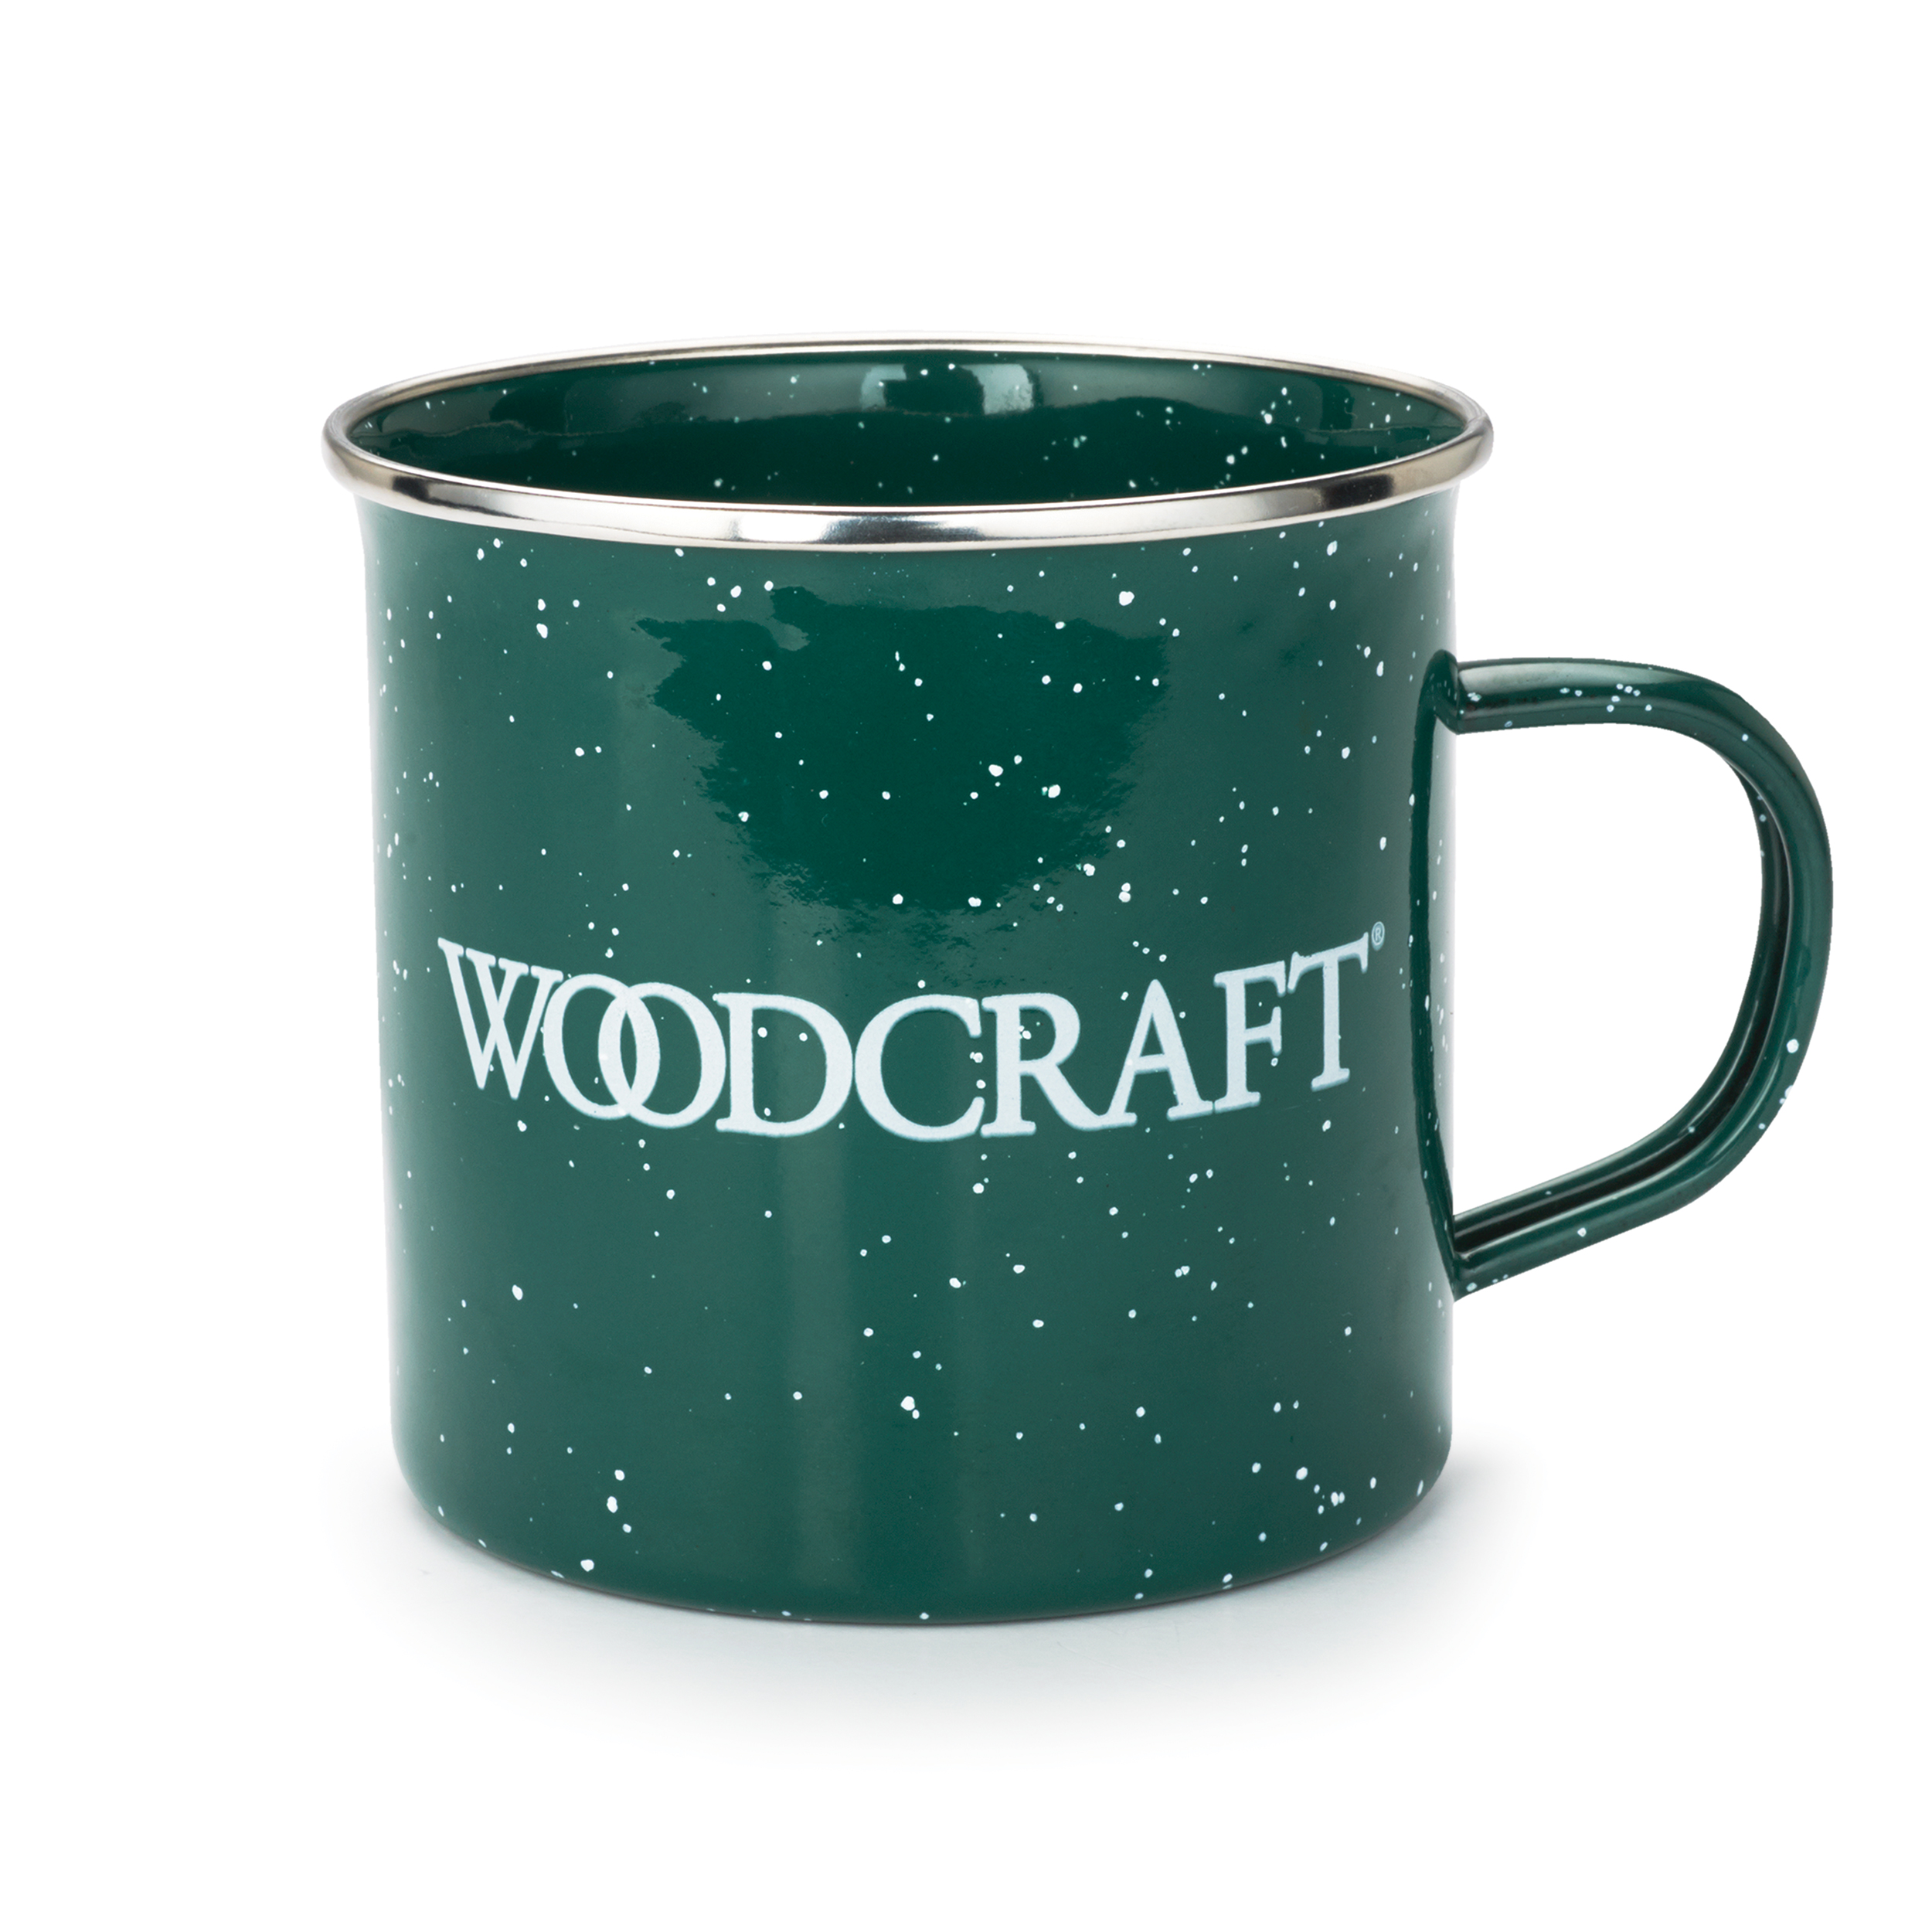 Woodcraft 19-ounce Enamel Mug